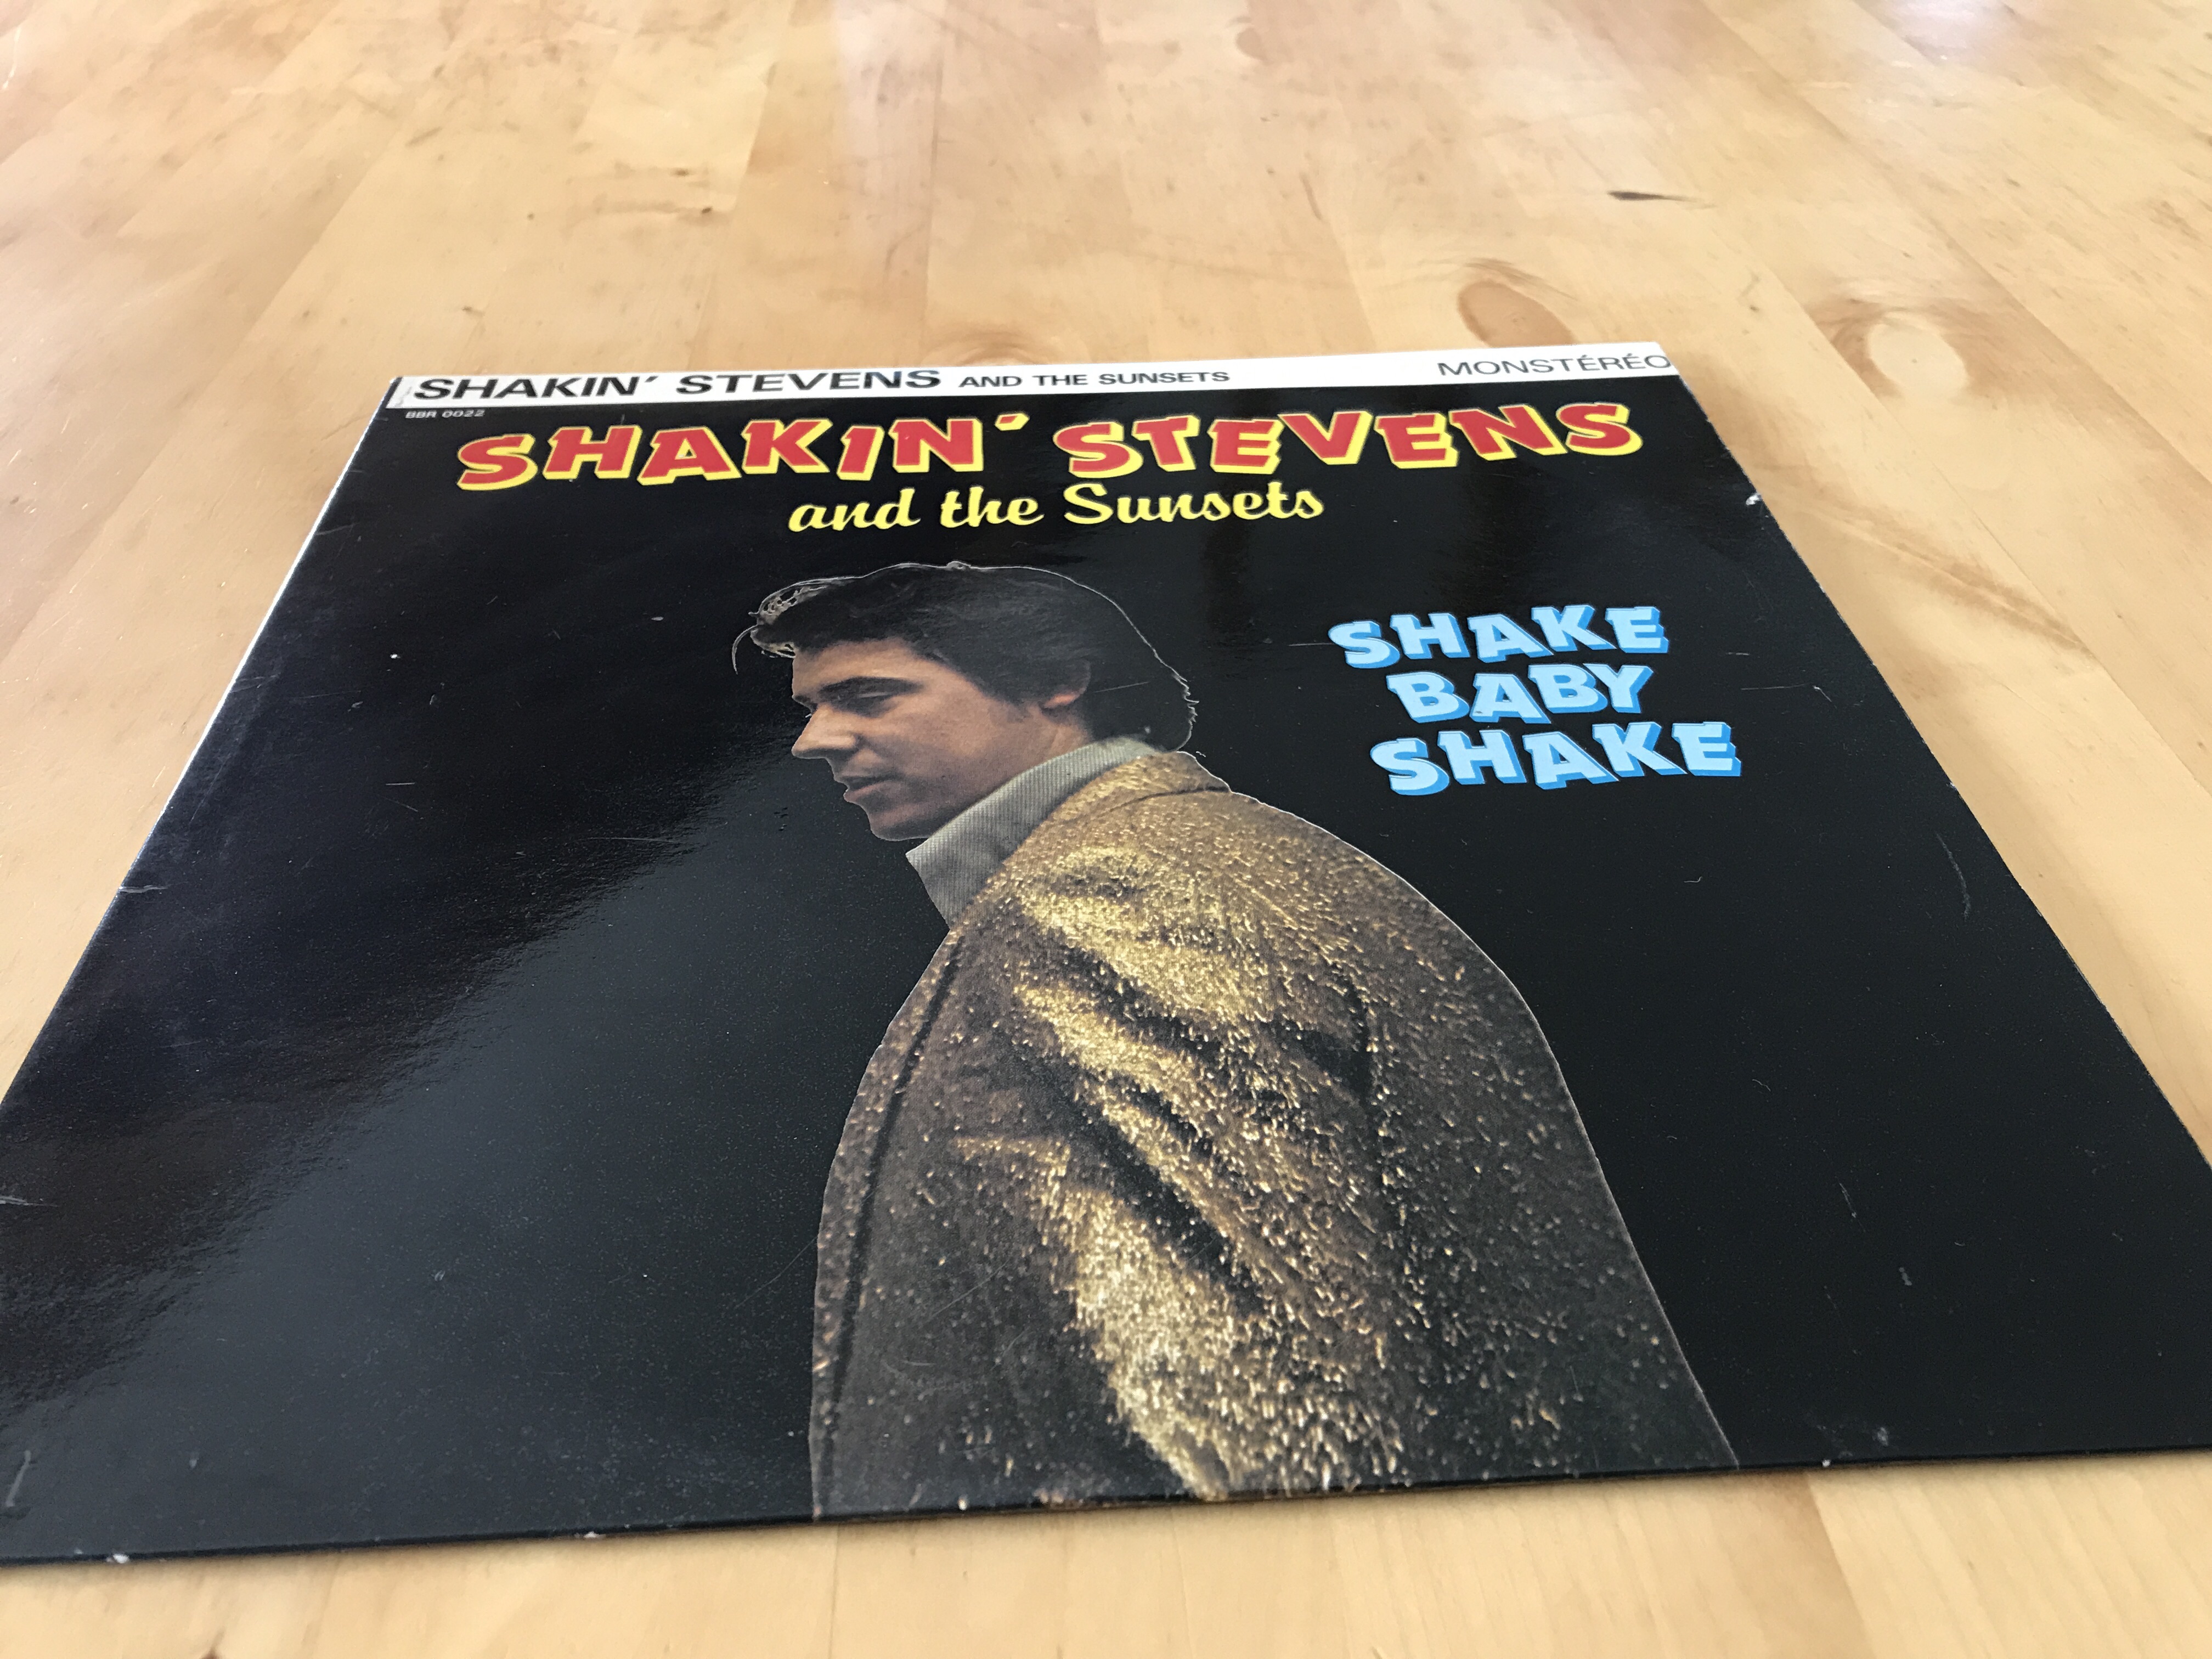 Acheter disque vinyle Shakin' Stevens and the sunsets Shake baby shake a vendre